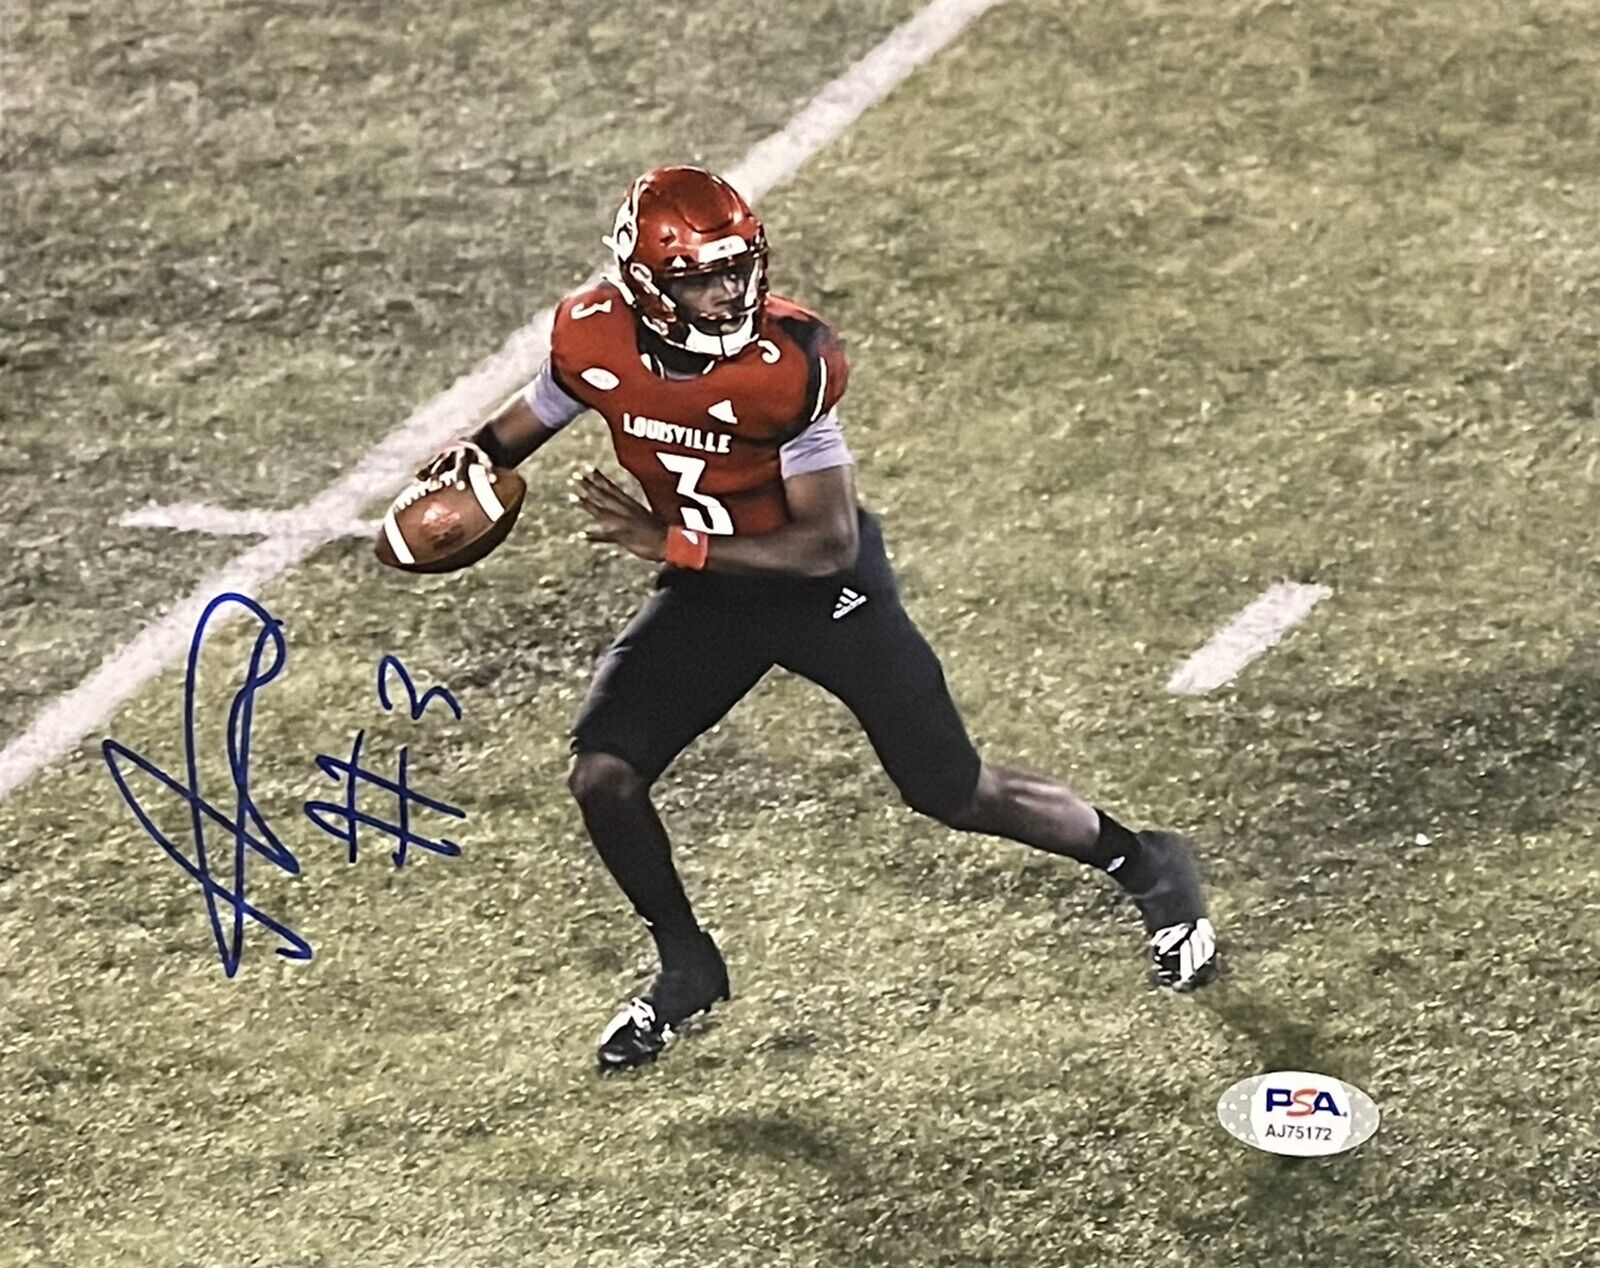 Malik Cunningham Signed Autographed Louisville Cardinals 8x10 Photo Poster painting PSA/DNA